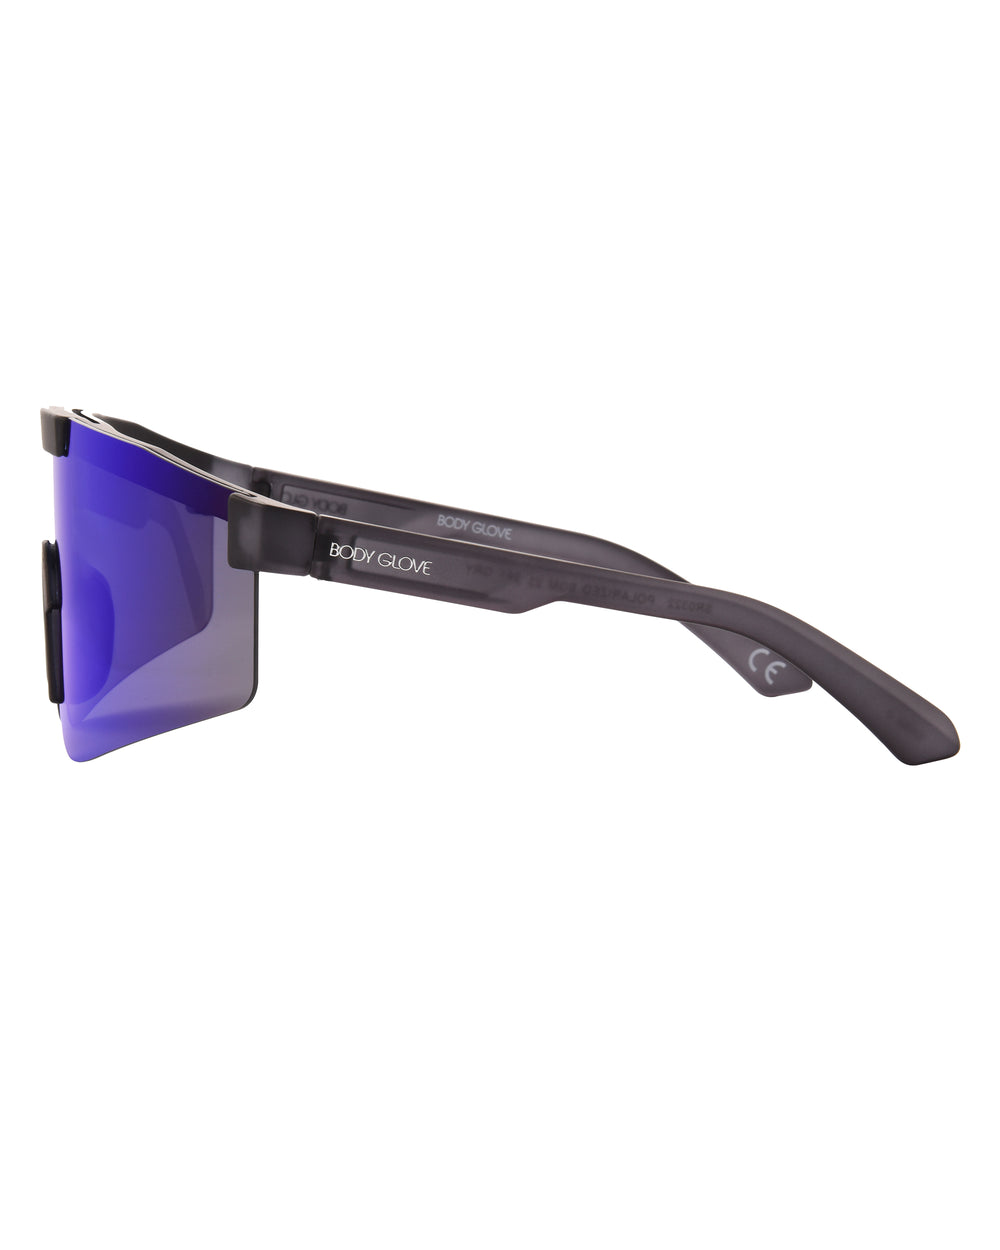 Peak Polarized Shield Sunglasses - Grey - Body Glove